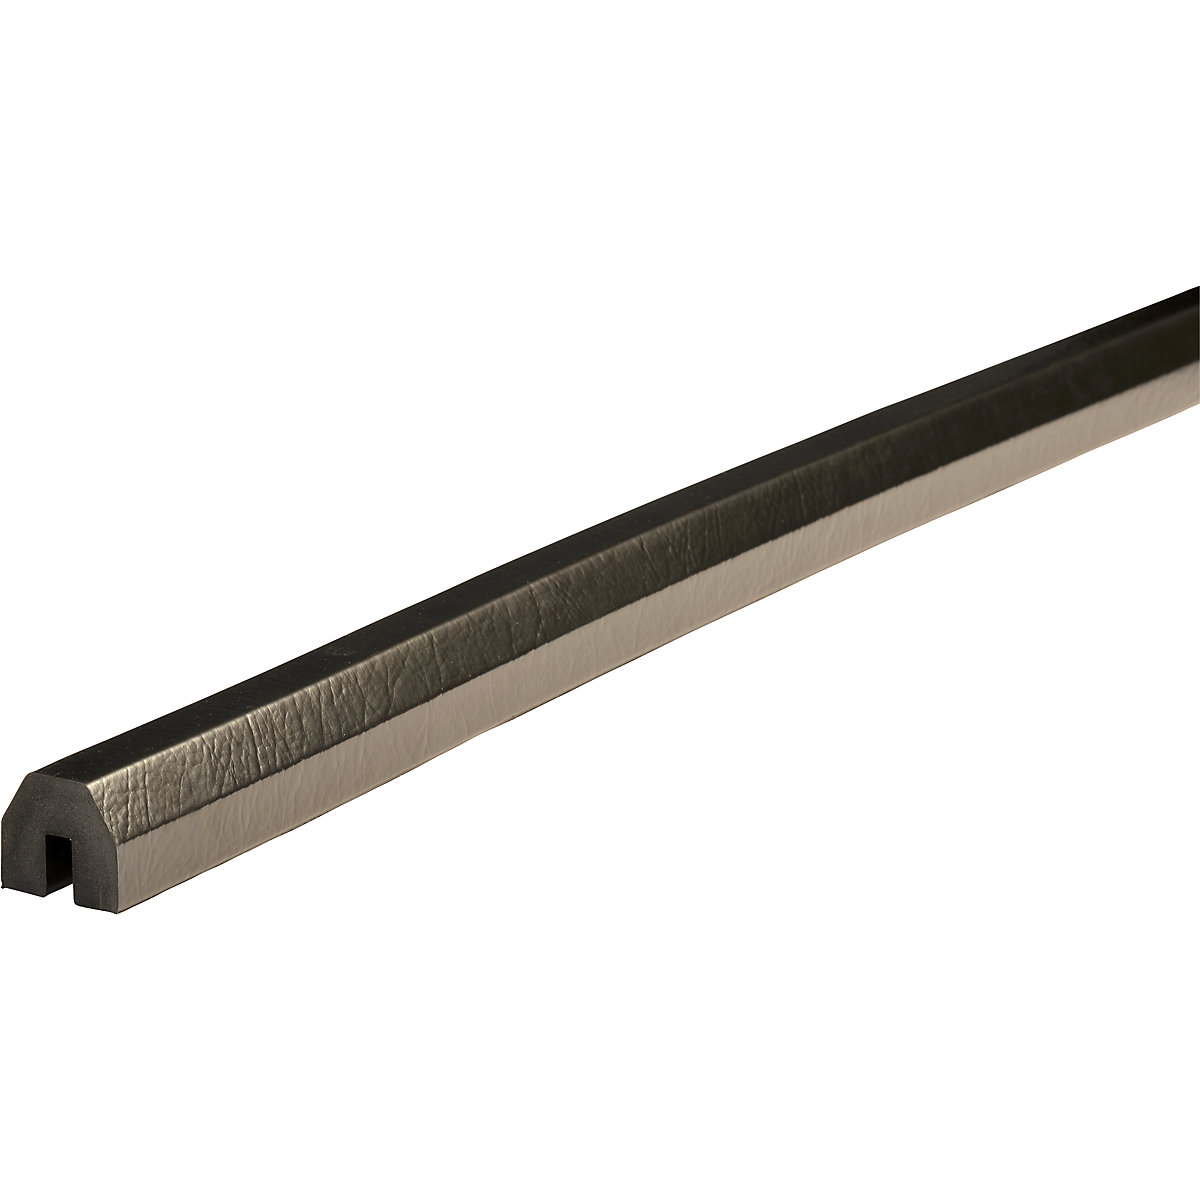 Knuffi® edge protection – SHG, type BB, 1 x 50 m roll, black-19